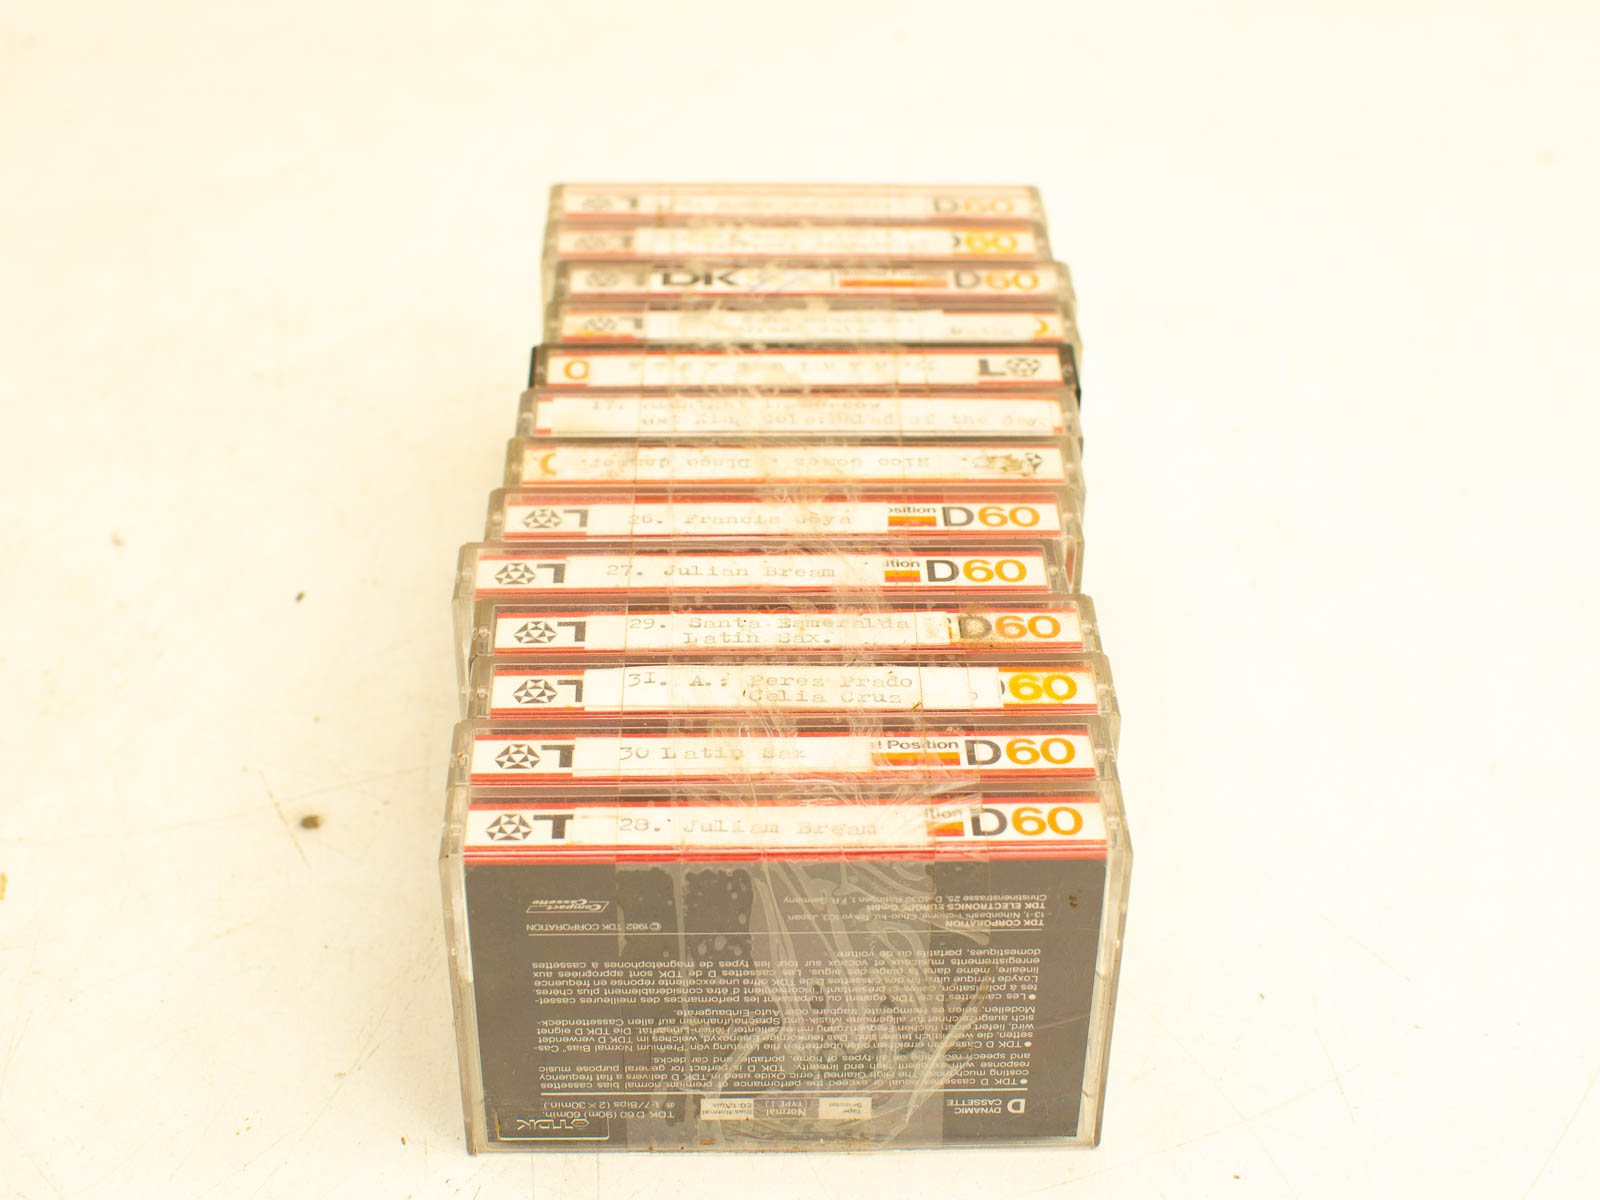 13 Tdk cassettebandjes  31267